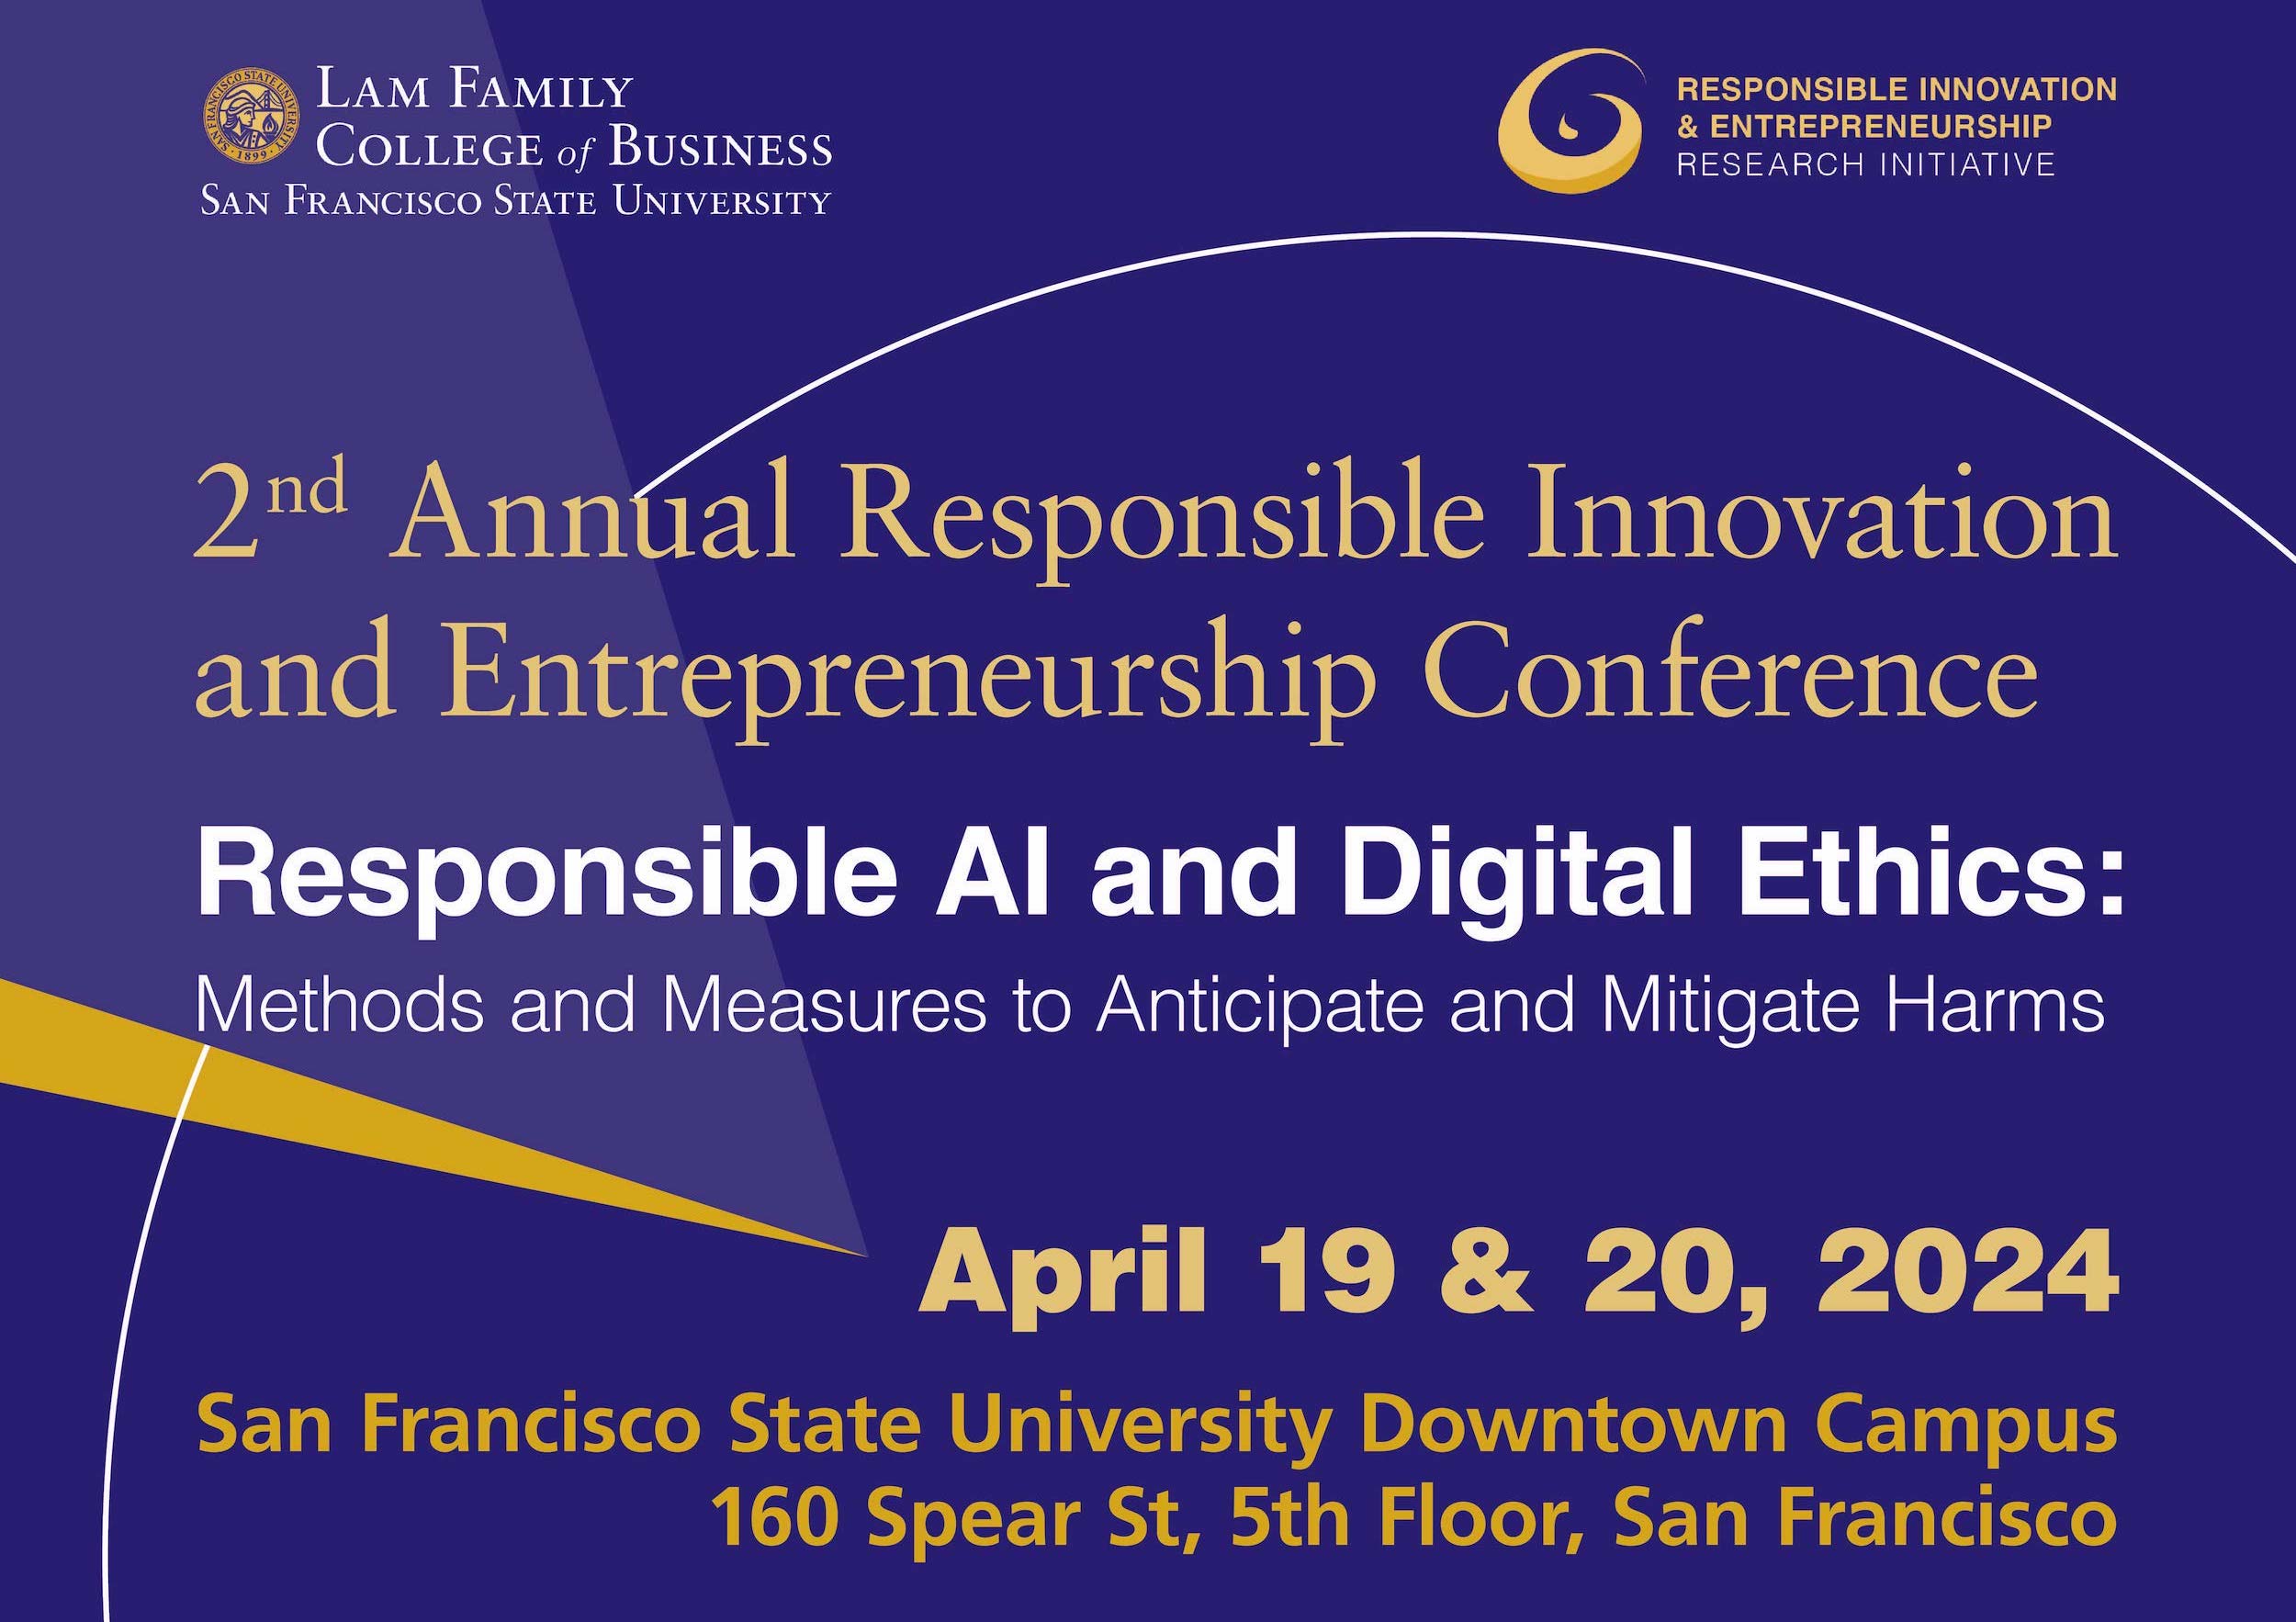 Responsible Innovation & Entrepreneurship Conference, April 19-20, 2024, San Francisco State University Downtown Campus, 160 Spear Street, 5th floor, San Francisco